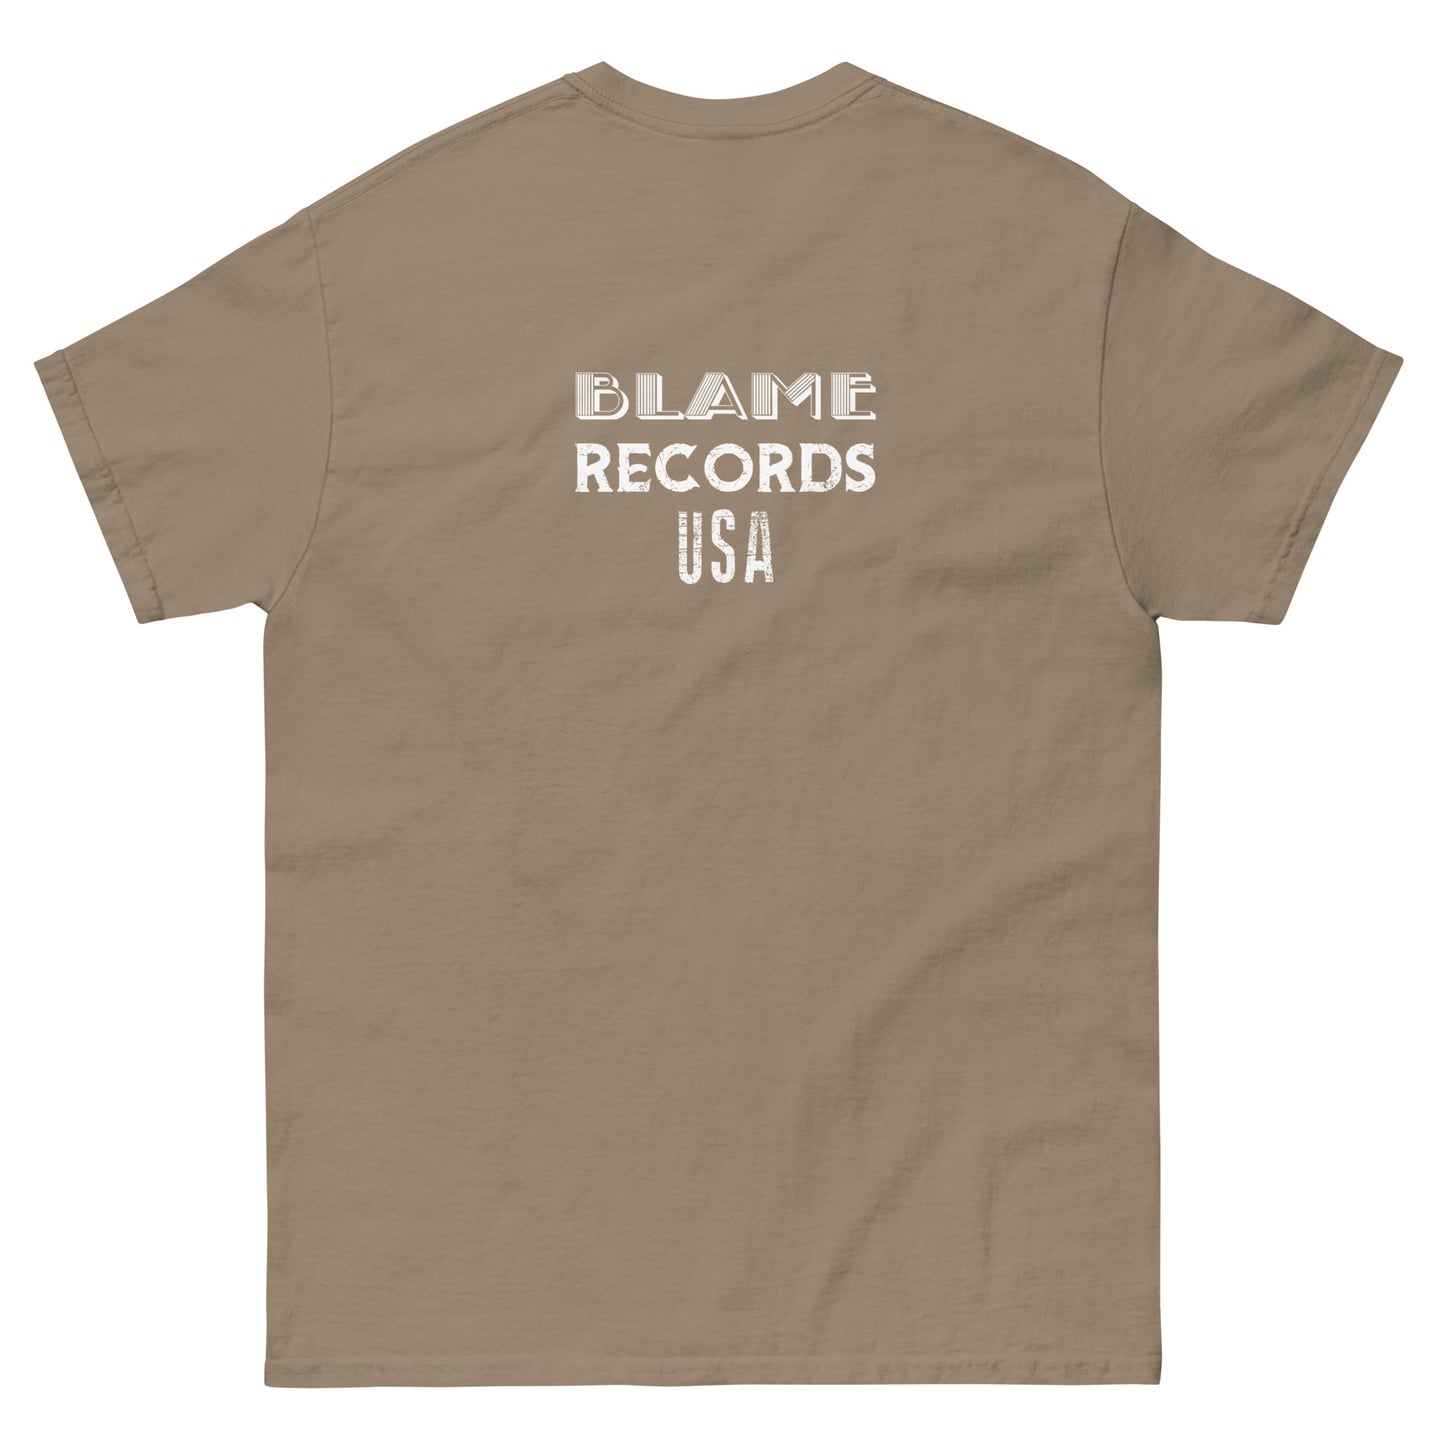 Men's classic tee - Blame Records USA